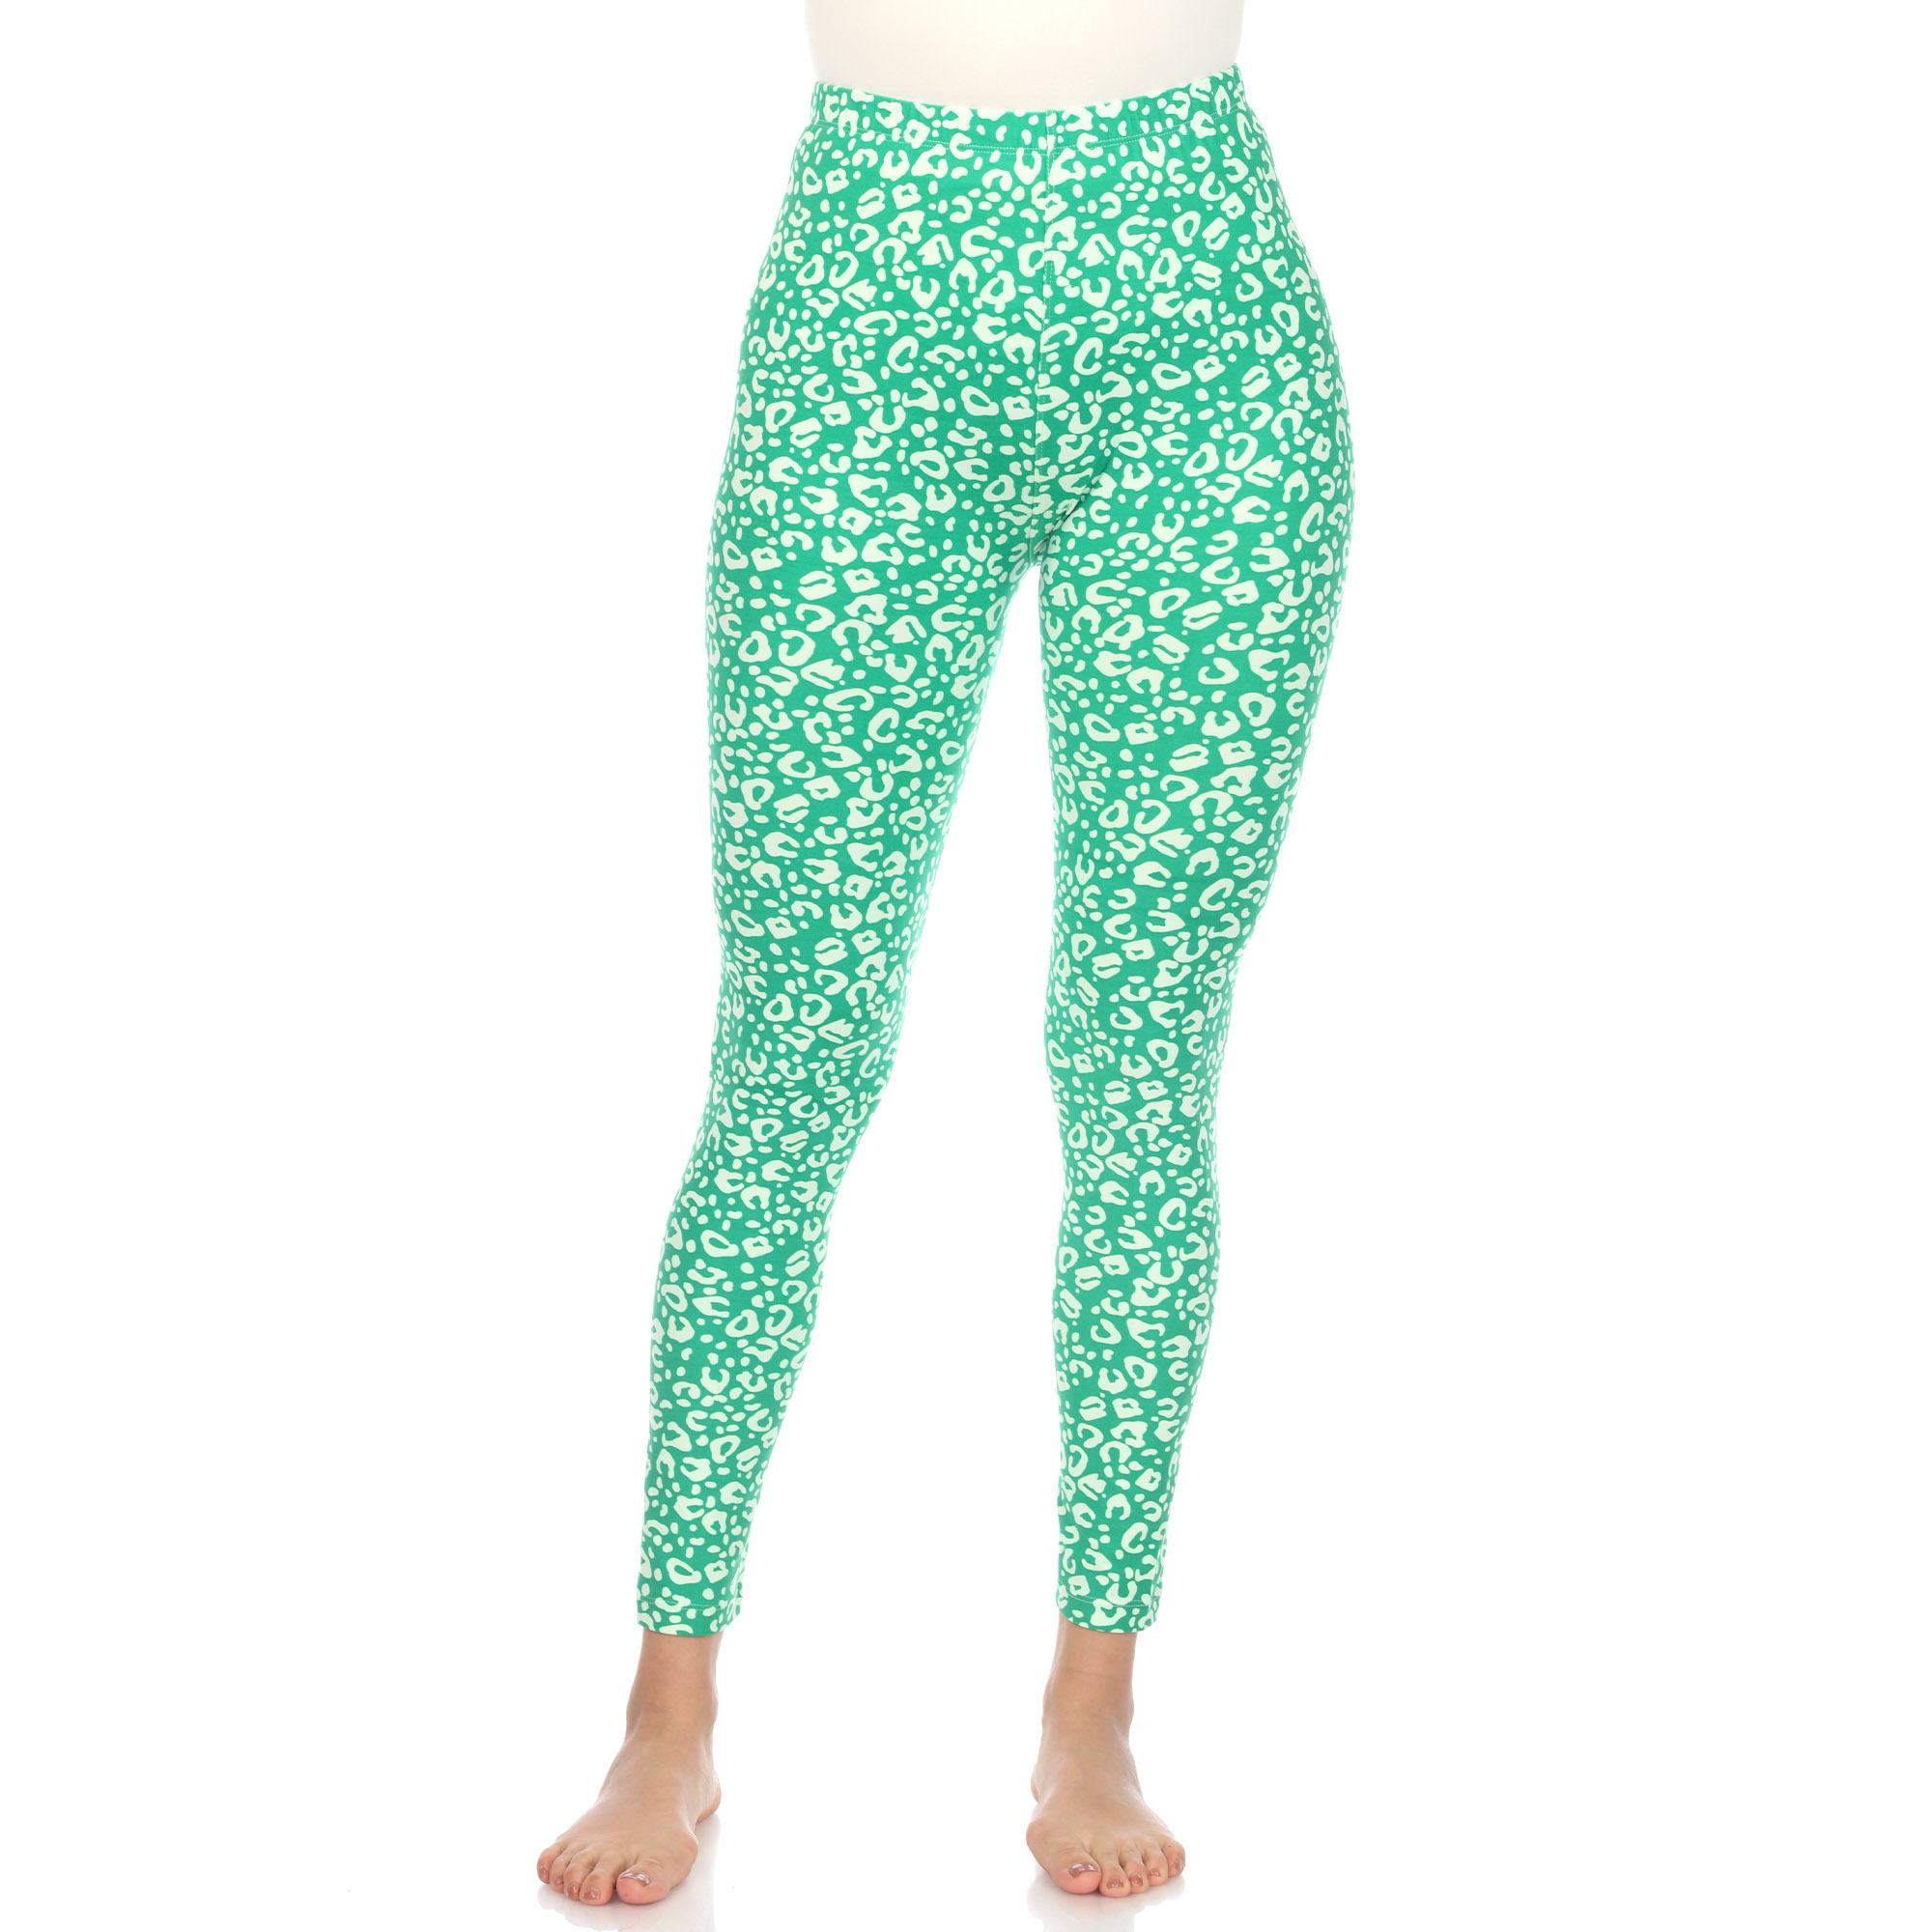 White Mark Women's Leopard Print Stretch Leggings - Green, One Size